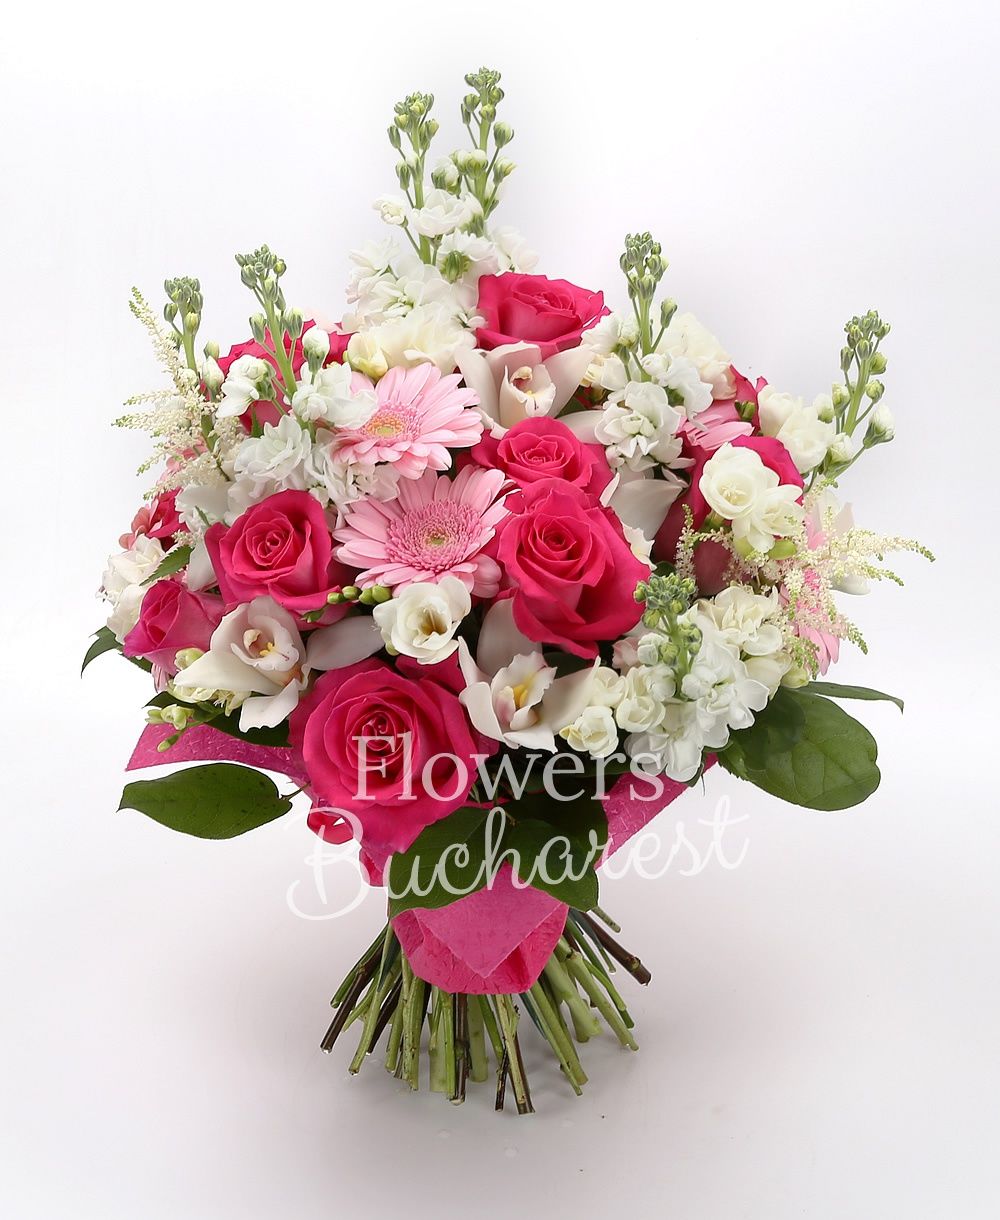 15 cyclam roses, 9 pink gerbera, 7 white matthiola, 20 white freesias, 5 white astilbe, white cymbidium, greenery